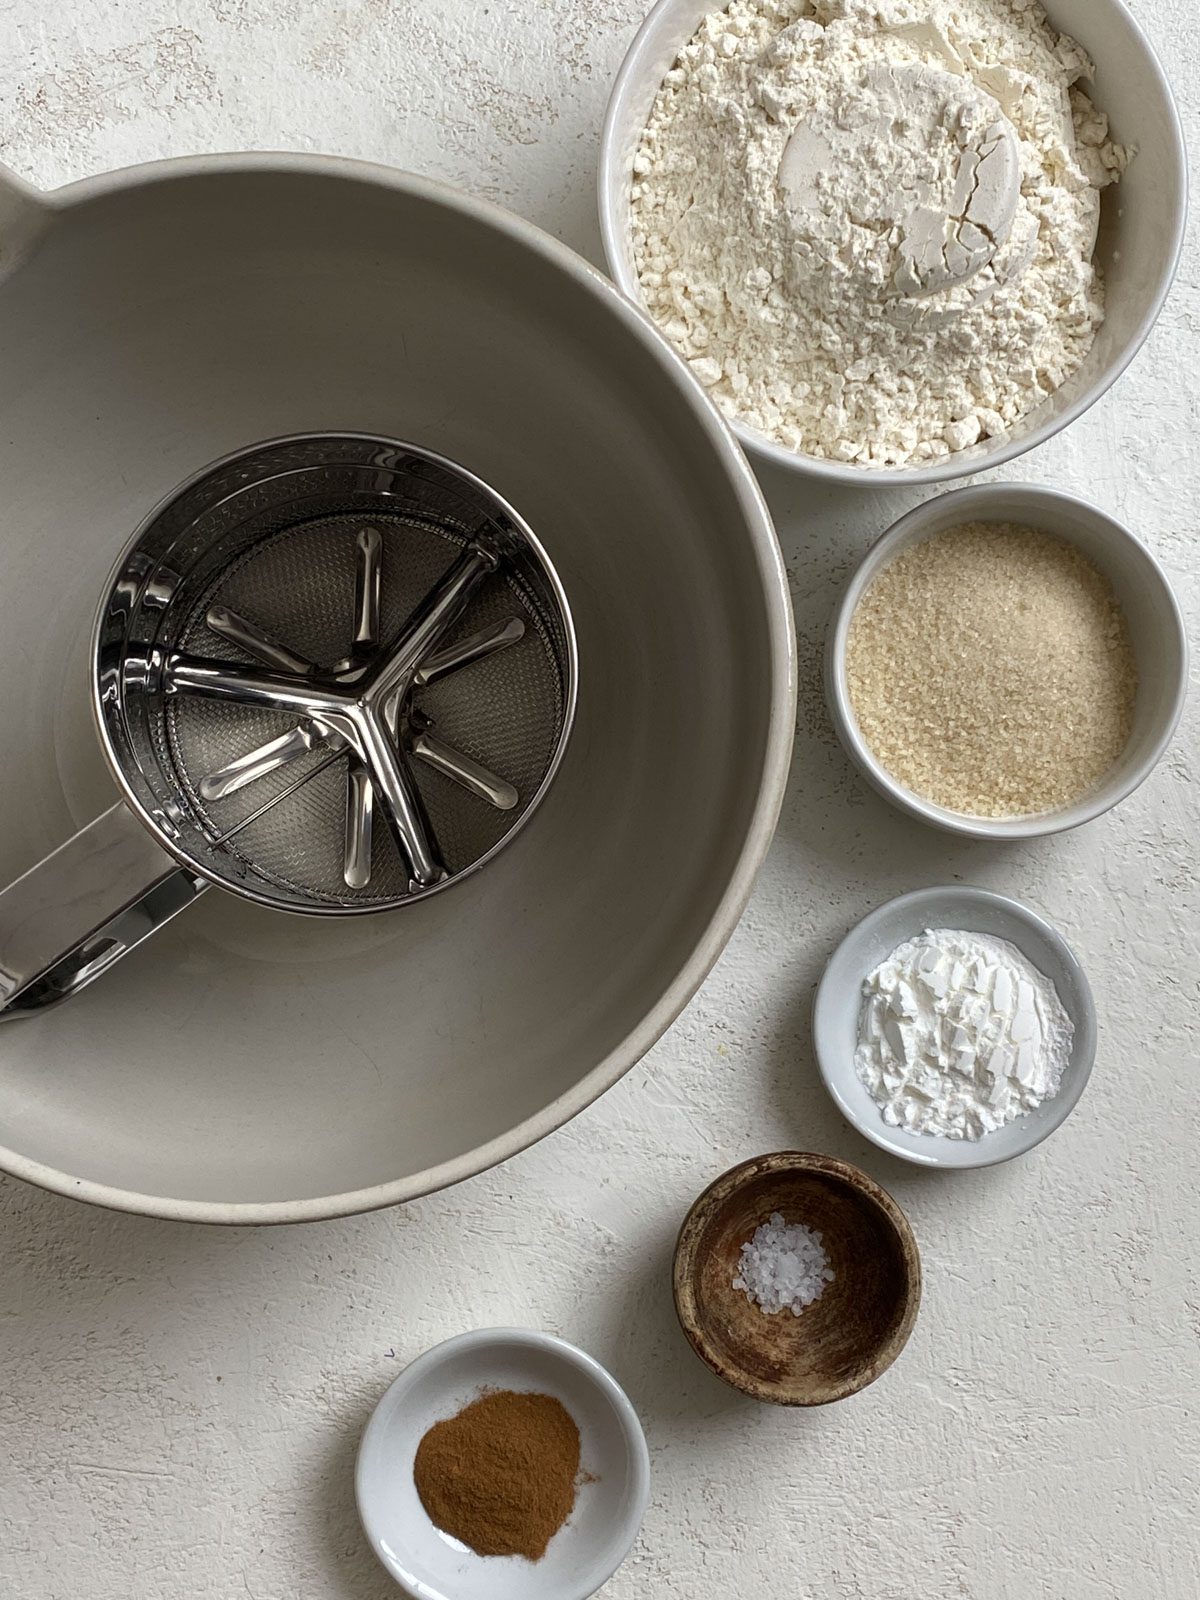 ingredients for Vegan Pumpkin Pancake batter alongside a bowl against a white surface